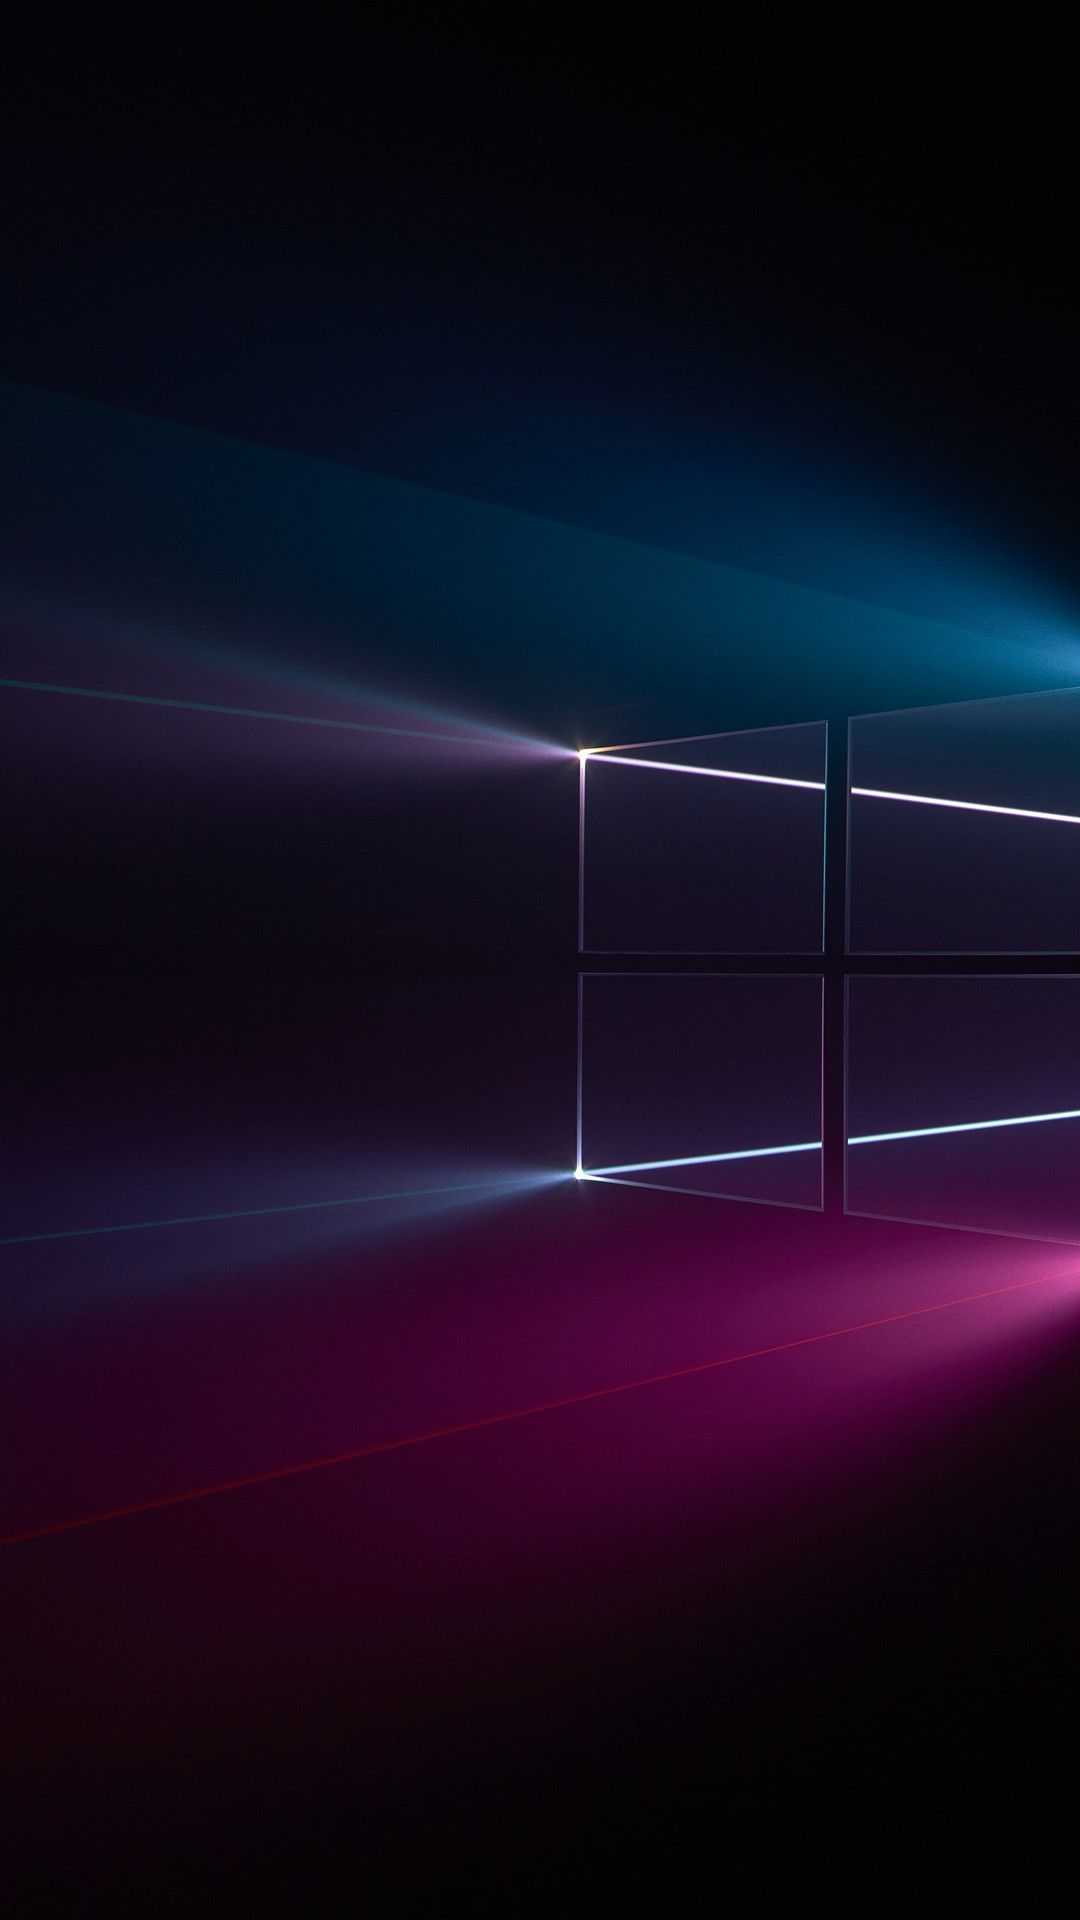 Wallpapers Windows 10, Windows logo, Blue, Pink, Dark, HD